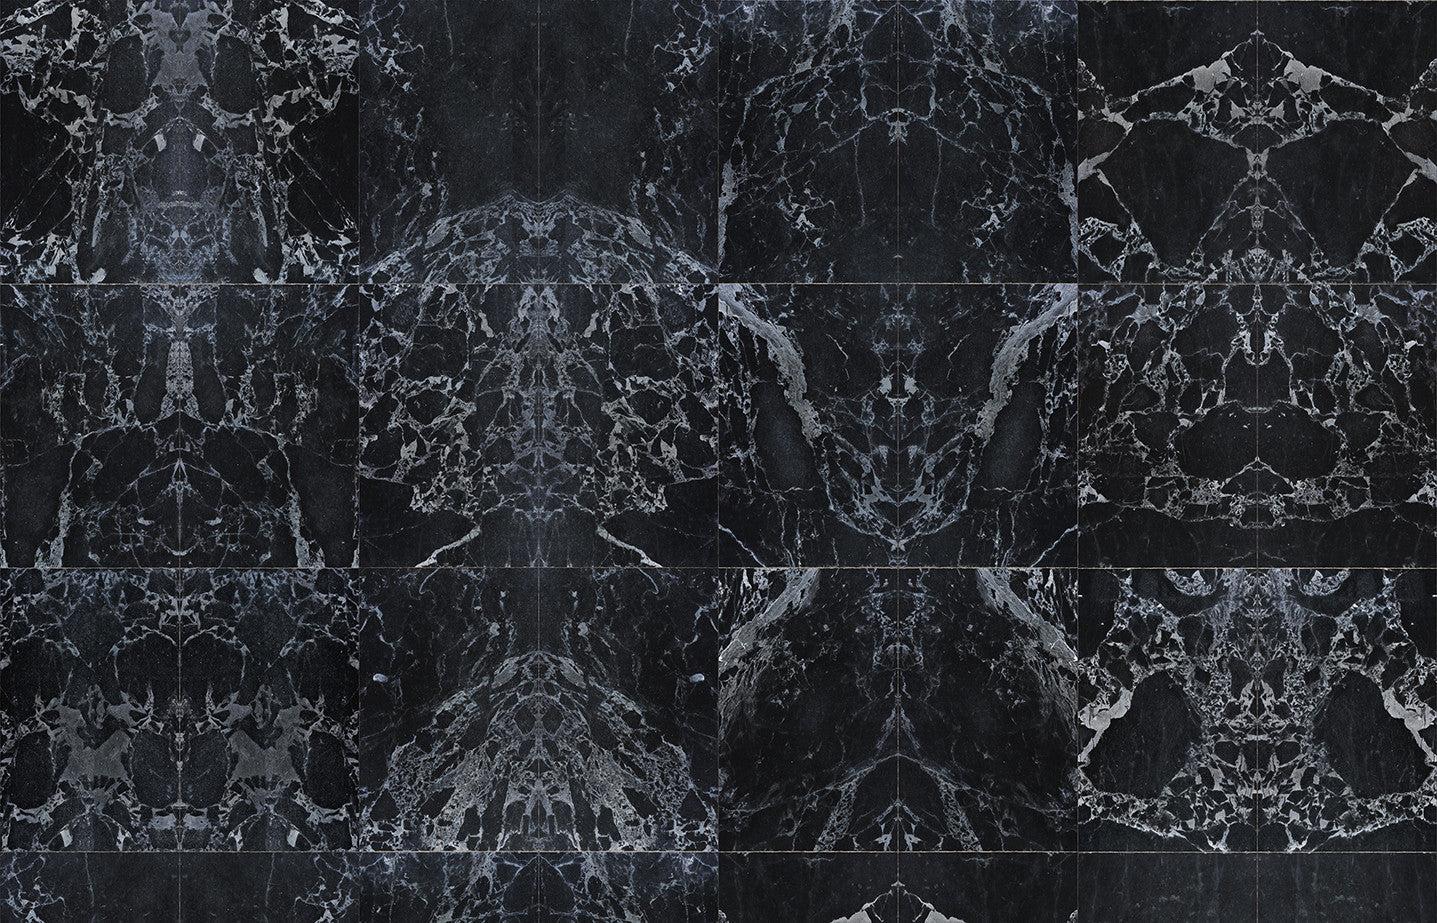 Sample Black Marble Wallpaper Design By Piet Hein Eek For Nlxl Wallpap Burke Decor